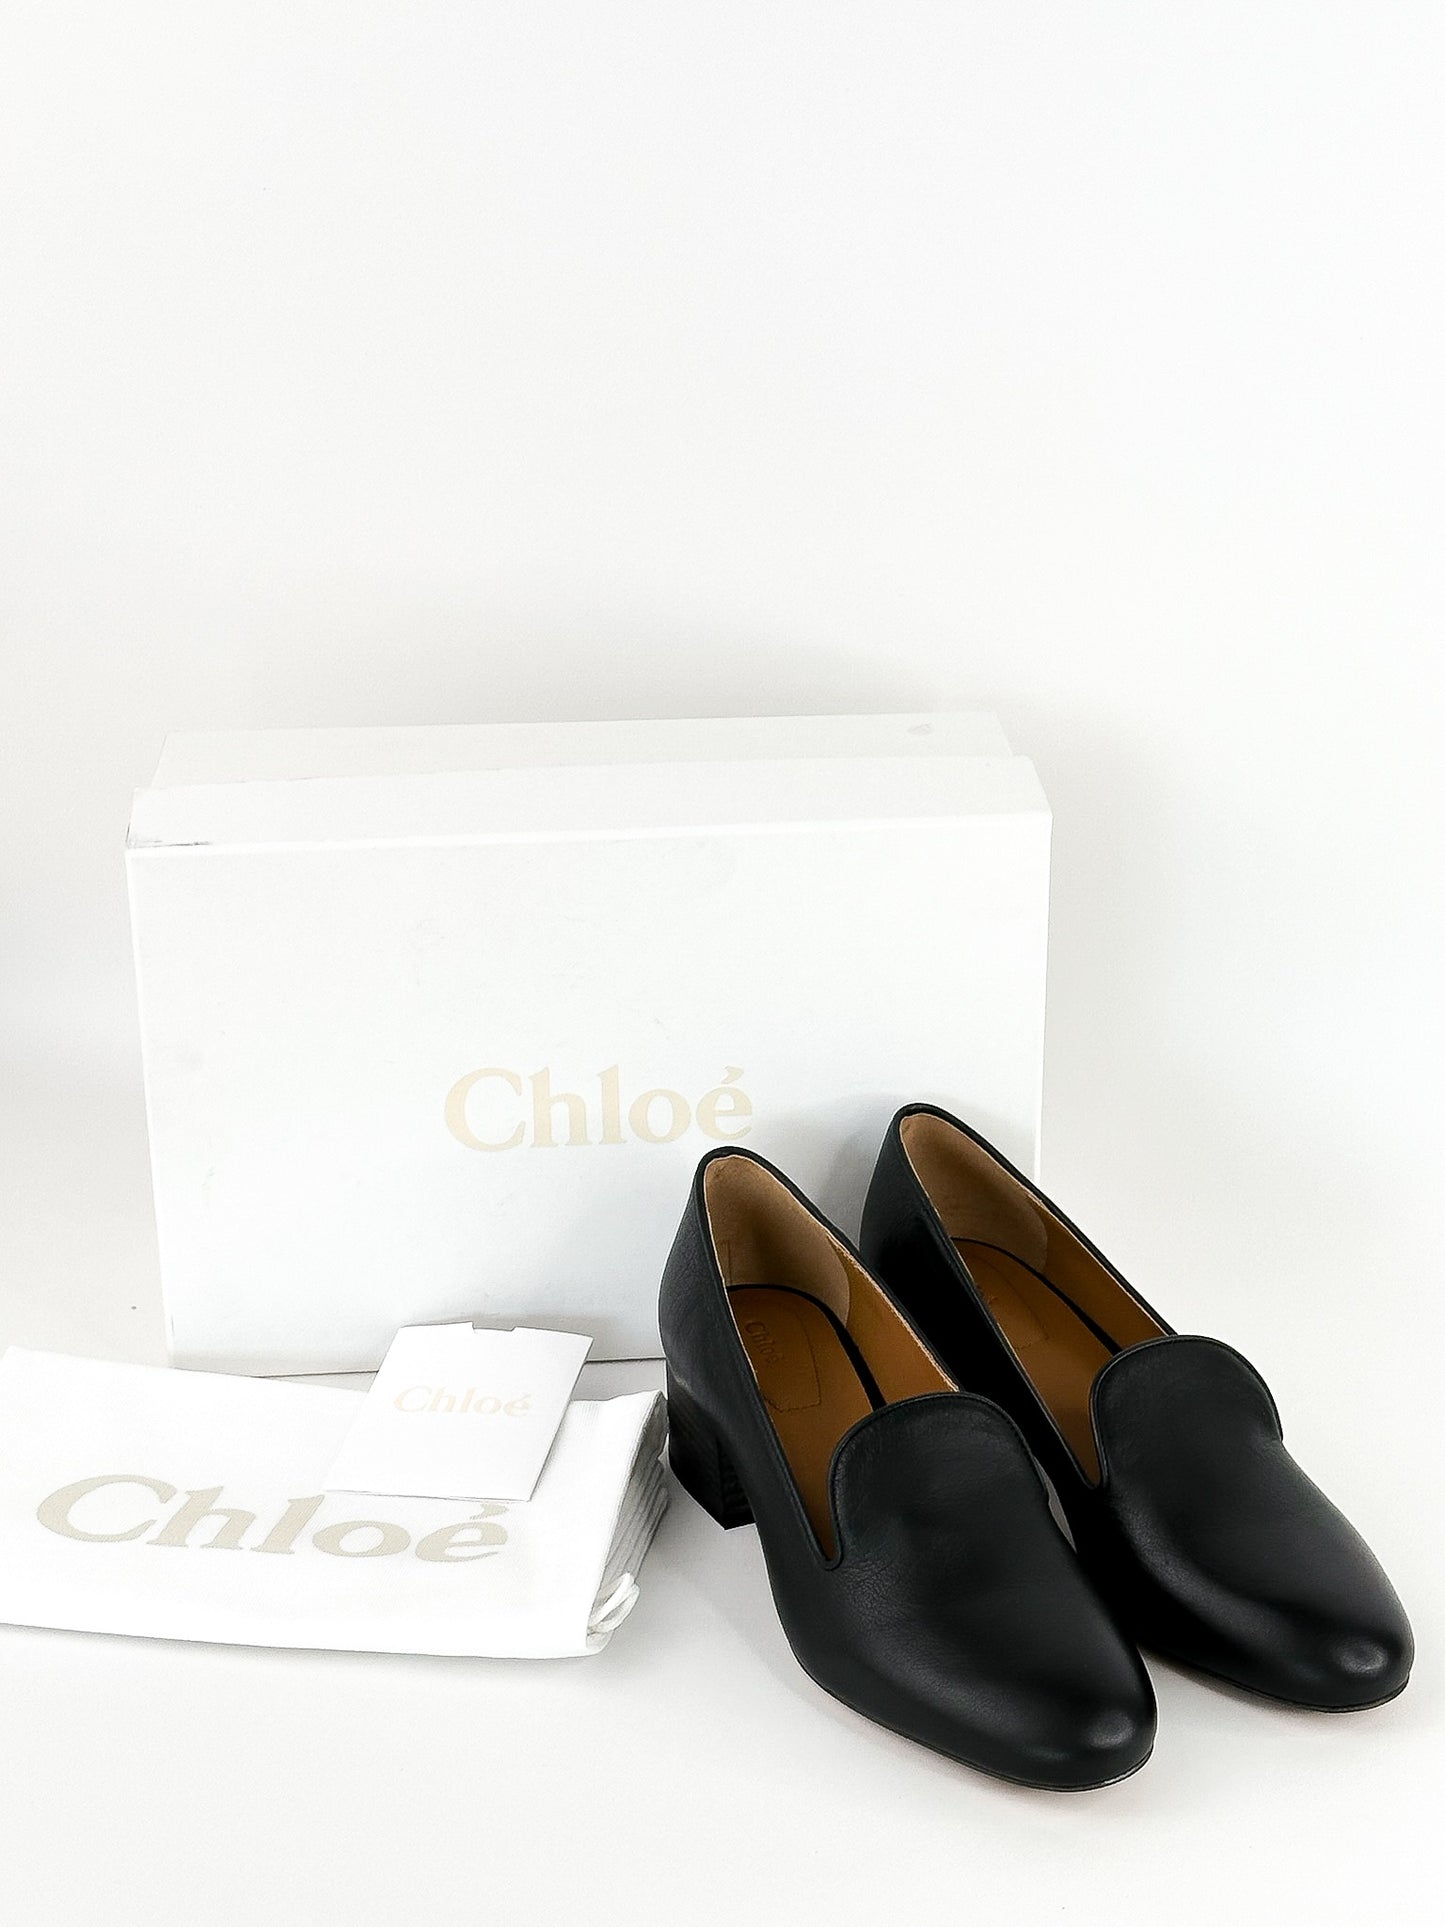 Chloe Uniform Black Loafers Size 36.5